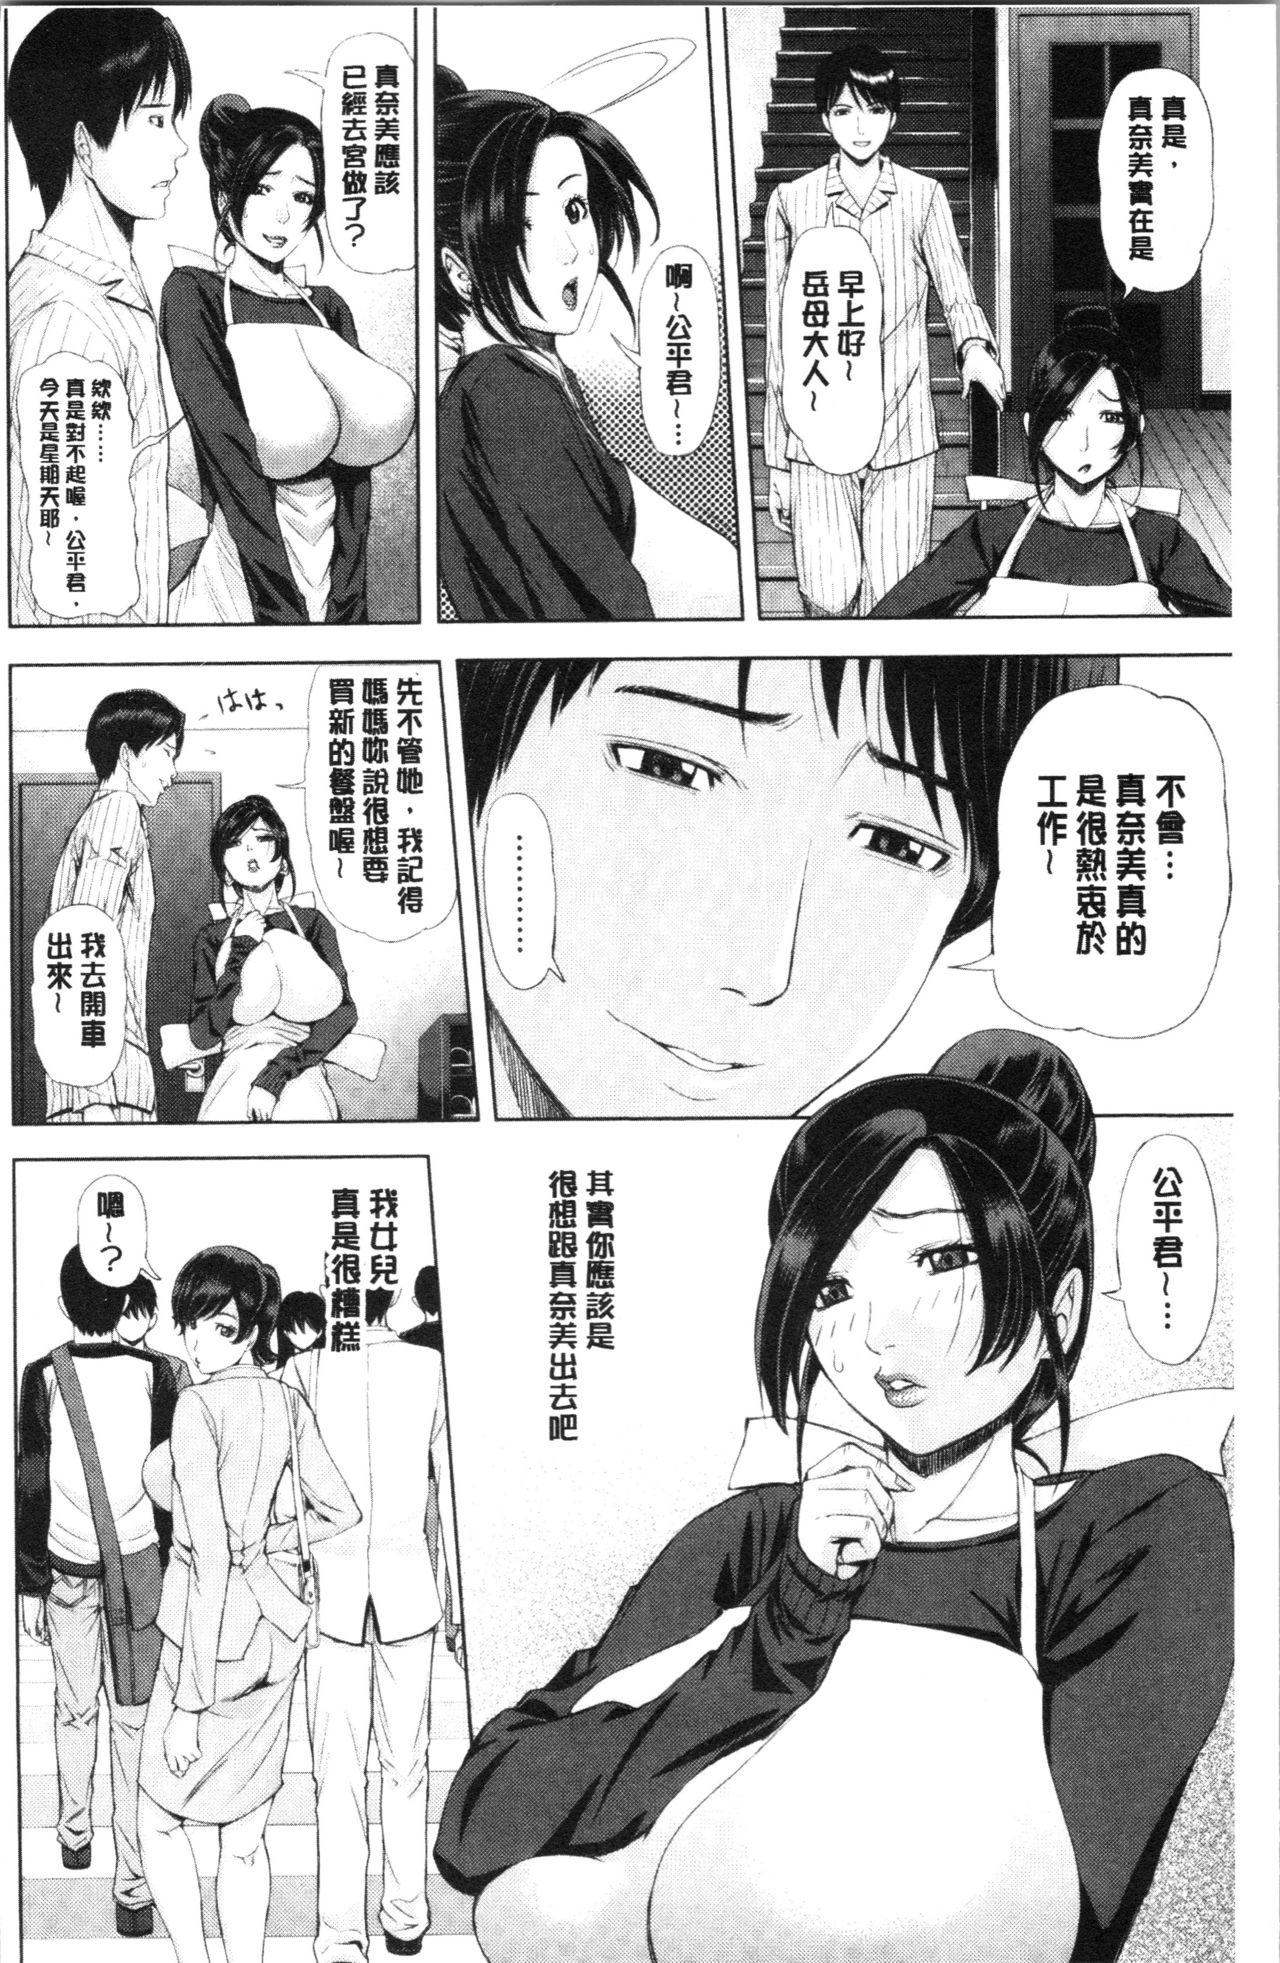 Adorable Iro Tsuya Me Whipping - Page 6